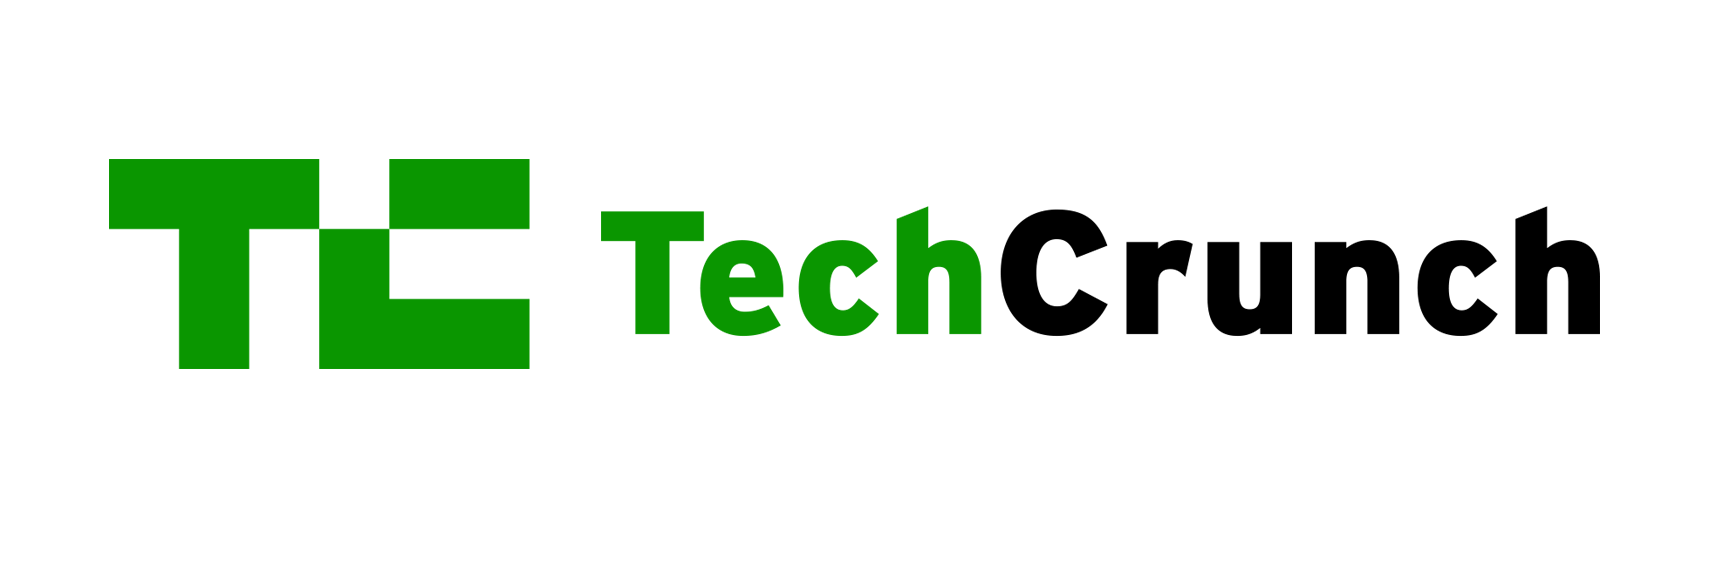 https://wordplayagency.com/wp-content/uploads/2019/03/techcrunch-logo-1.png